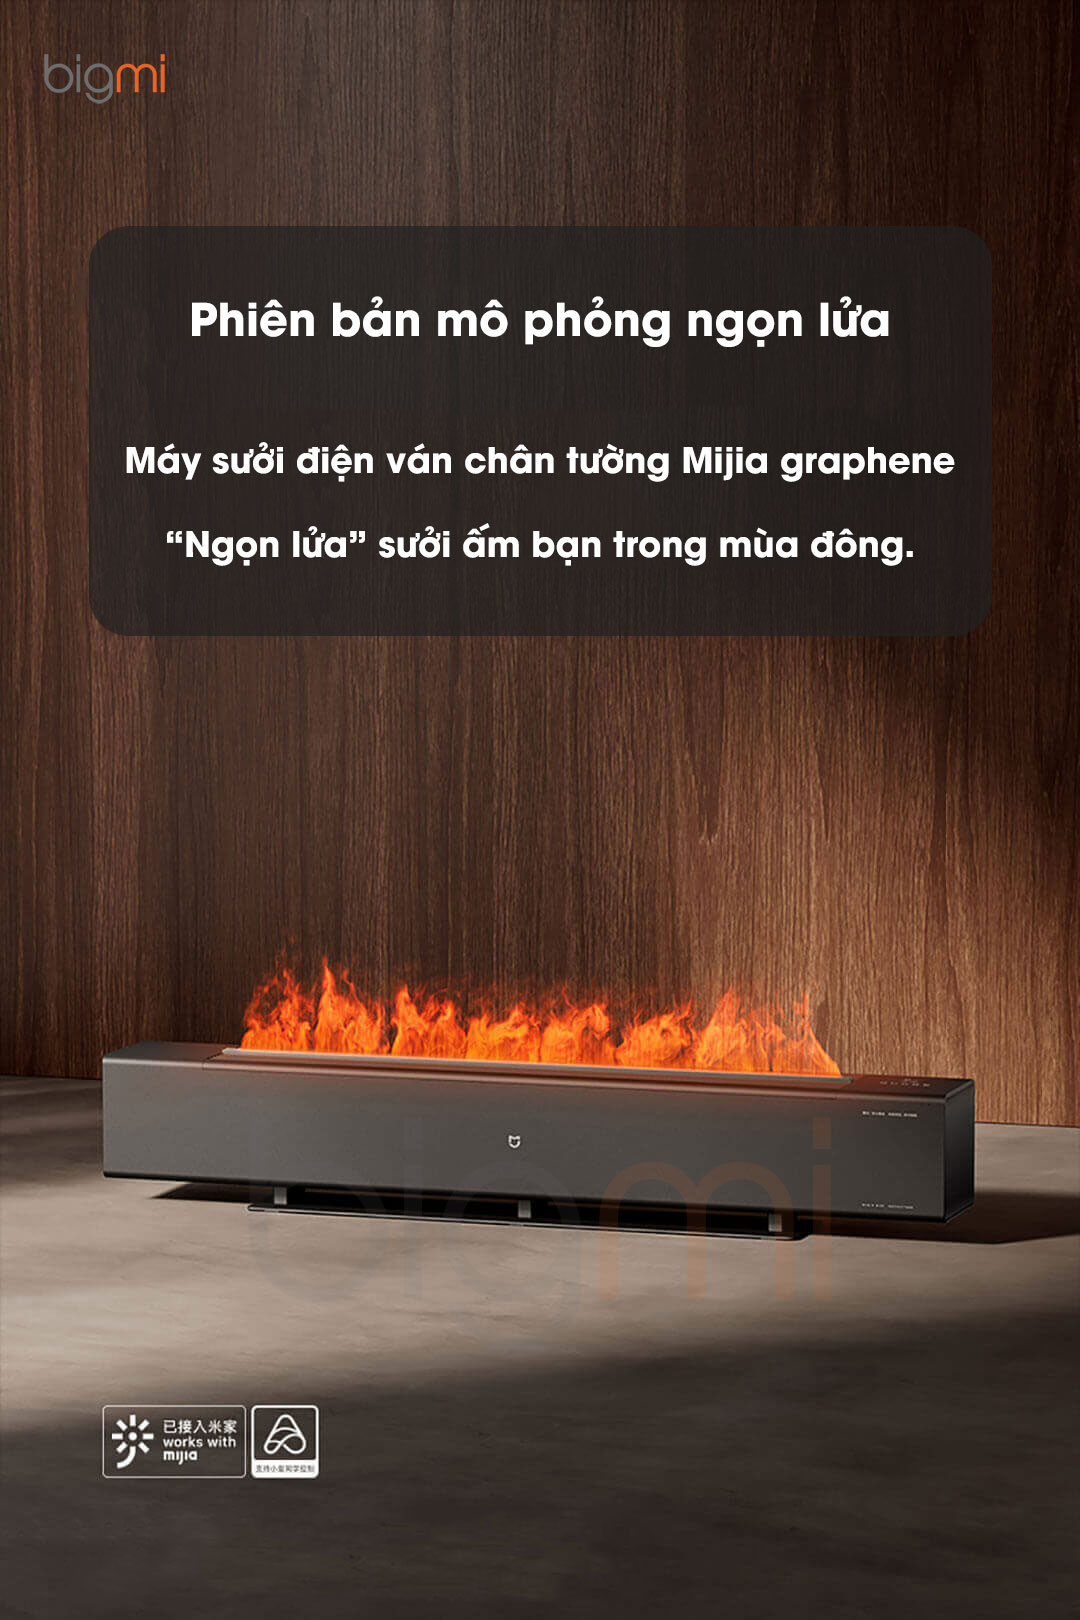 Máy sưởi Xiaomi Mijia Graphene Baseboard Flame - TJXDNQ06ZM giả lập ngọn lửa 4D